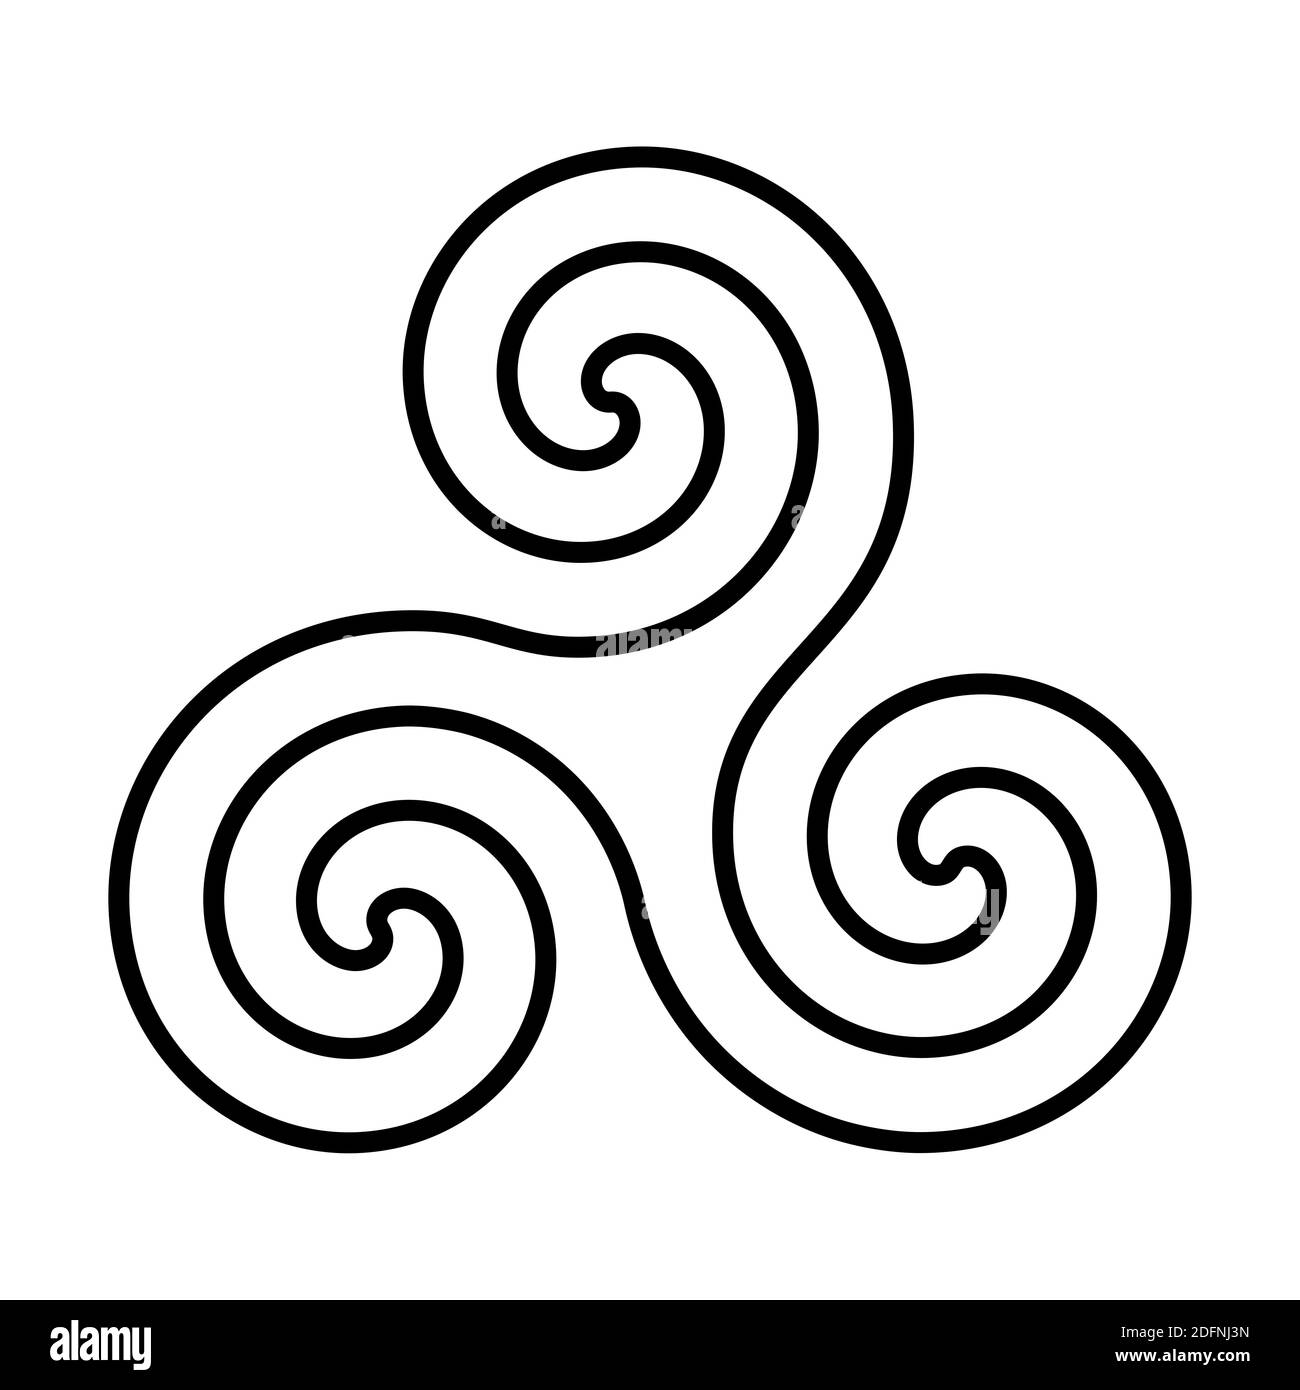 Triskelion symbol icon Stock Photo - Alamy